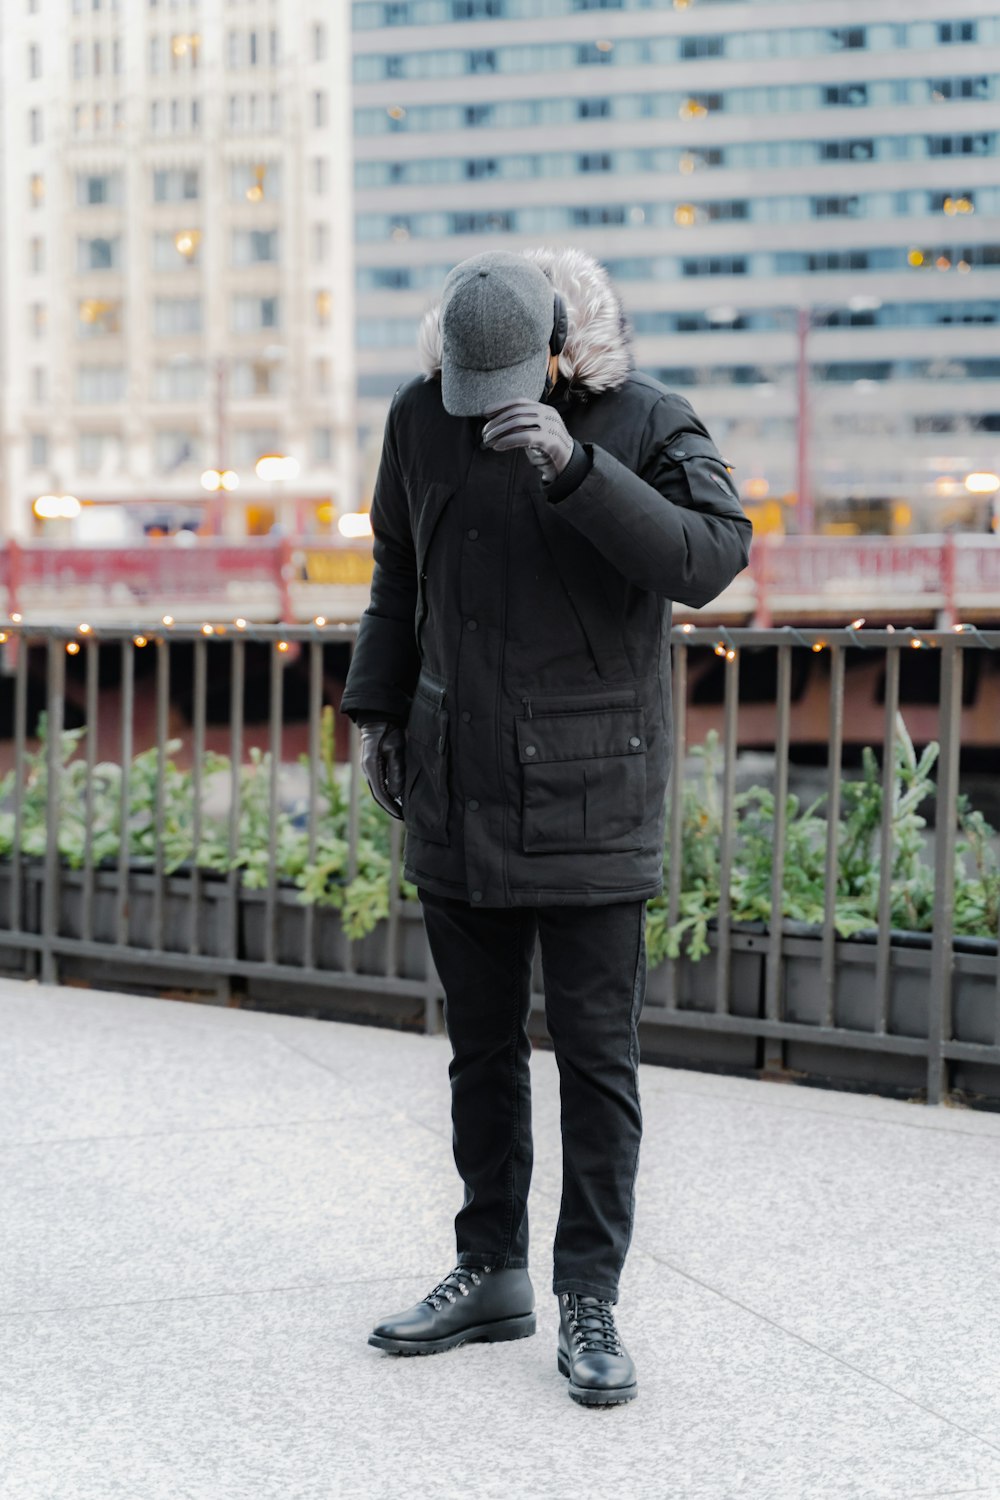 man in black jacket and black pants standing on sidewalk during daytime  photo – Free Chicago riverwalk Image on Unsplash